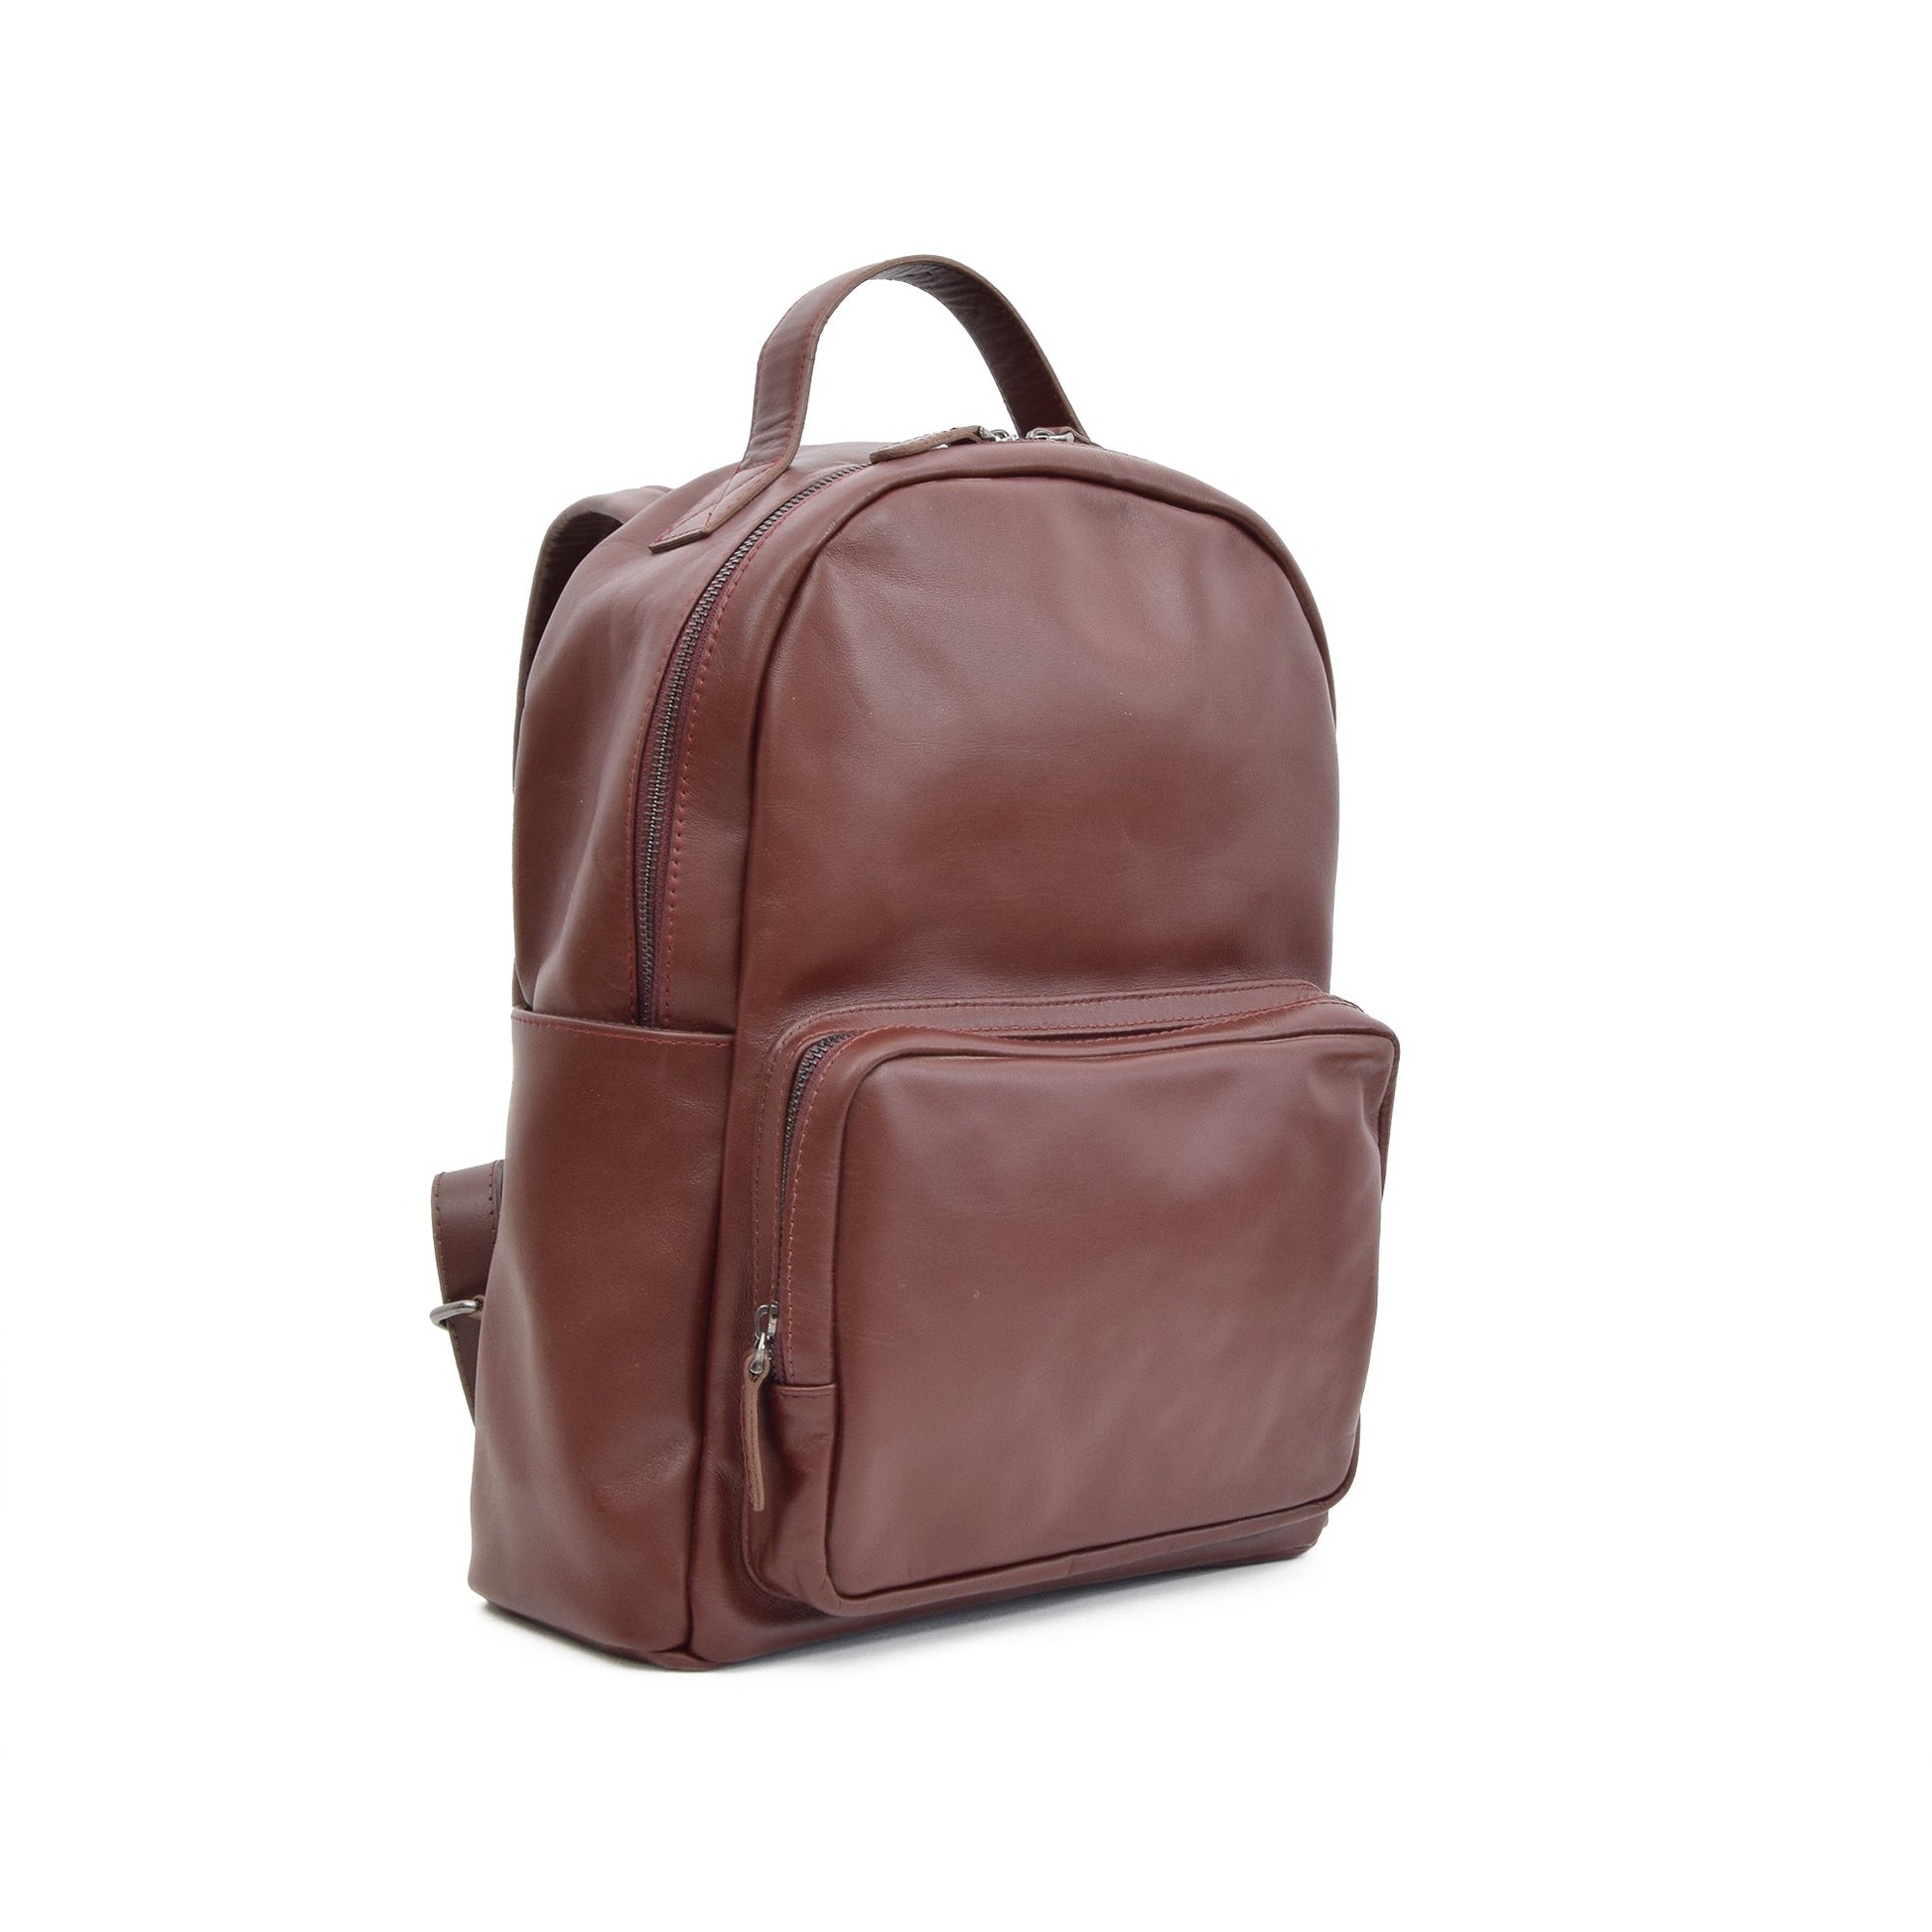 Maya Leather Backpacks - Zengoda Shop online from Artisan Brands